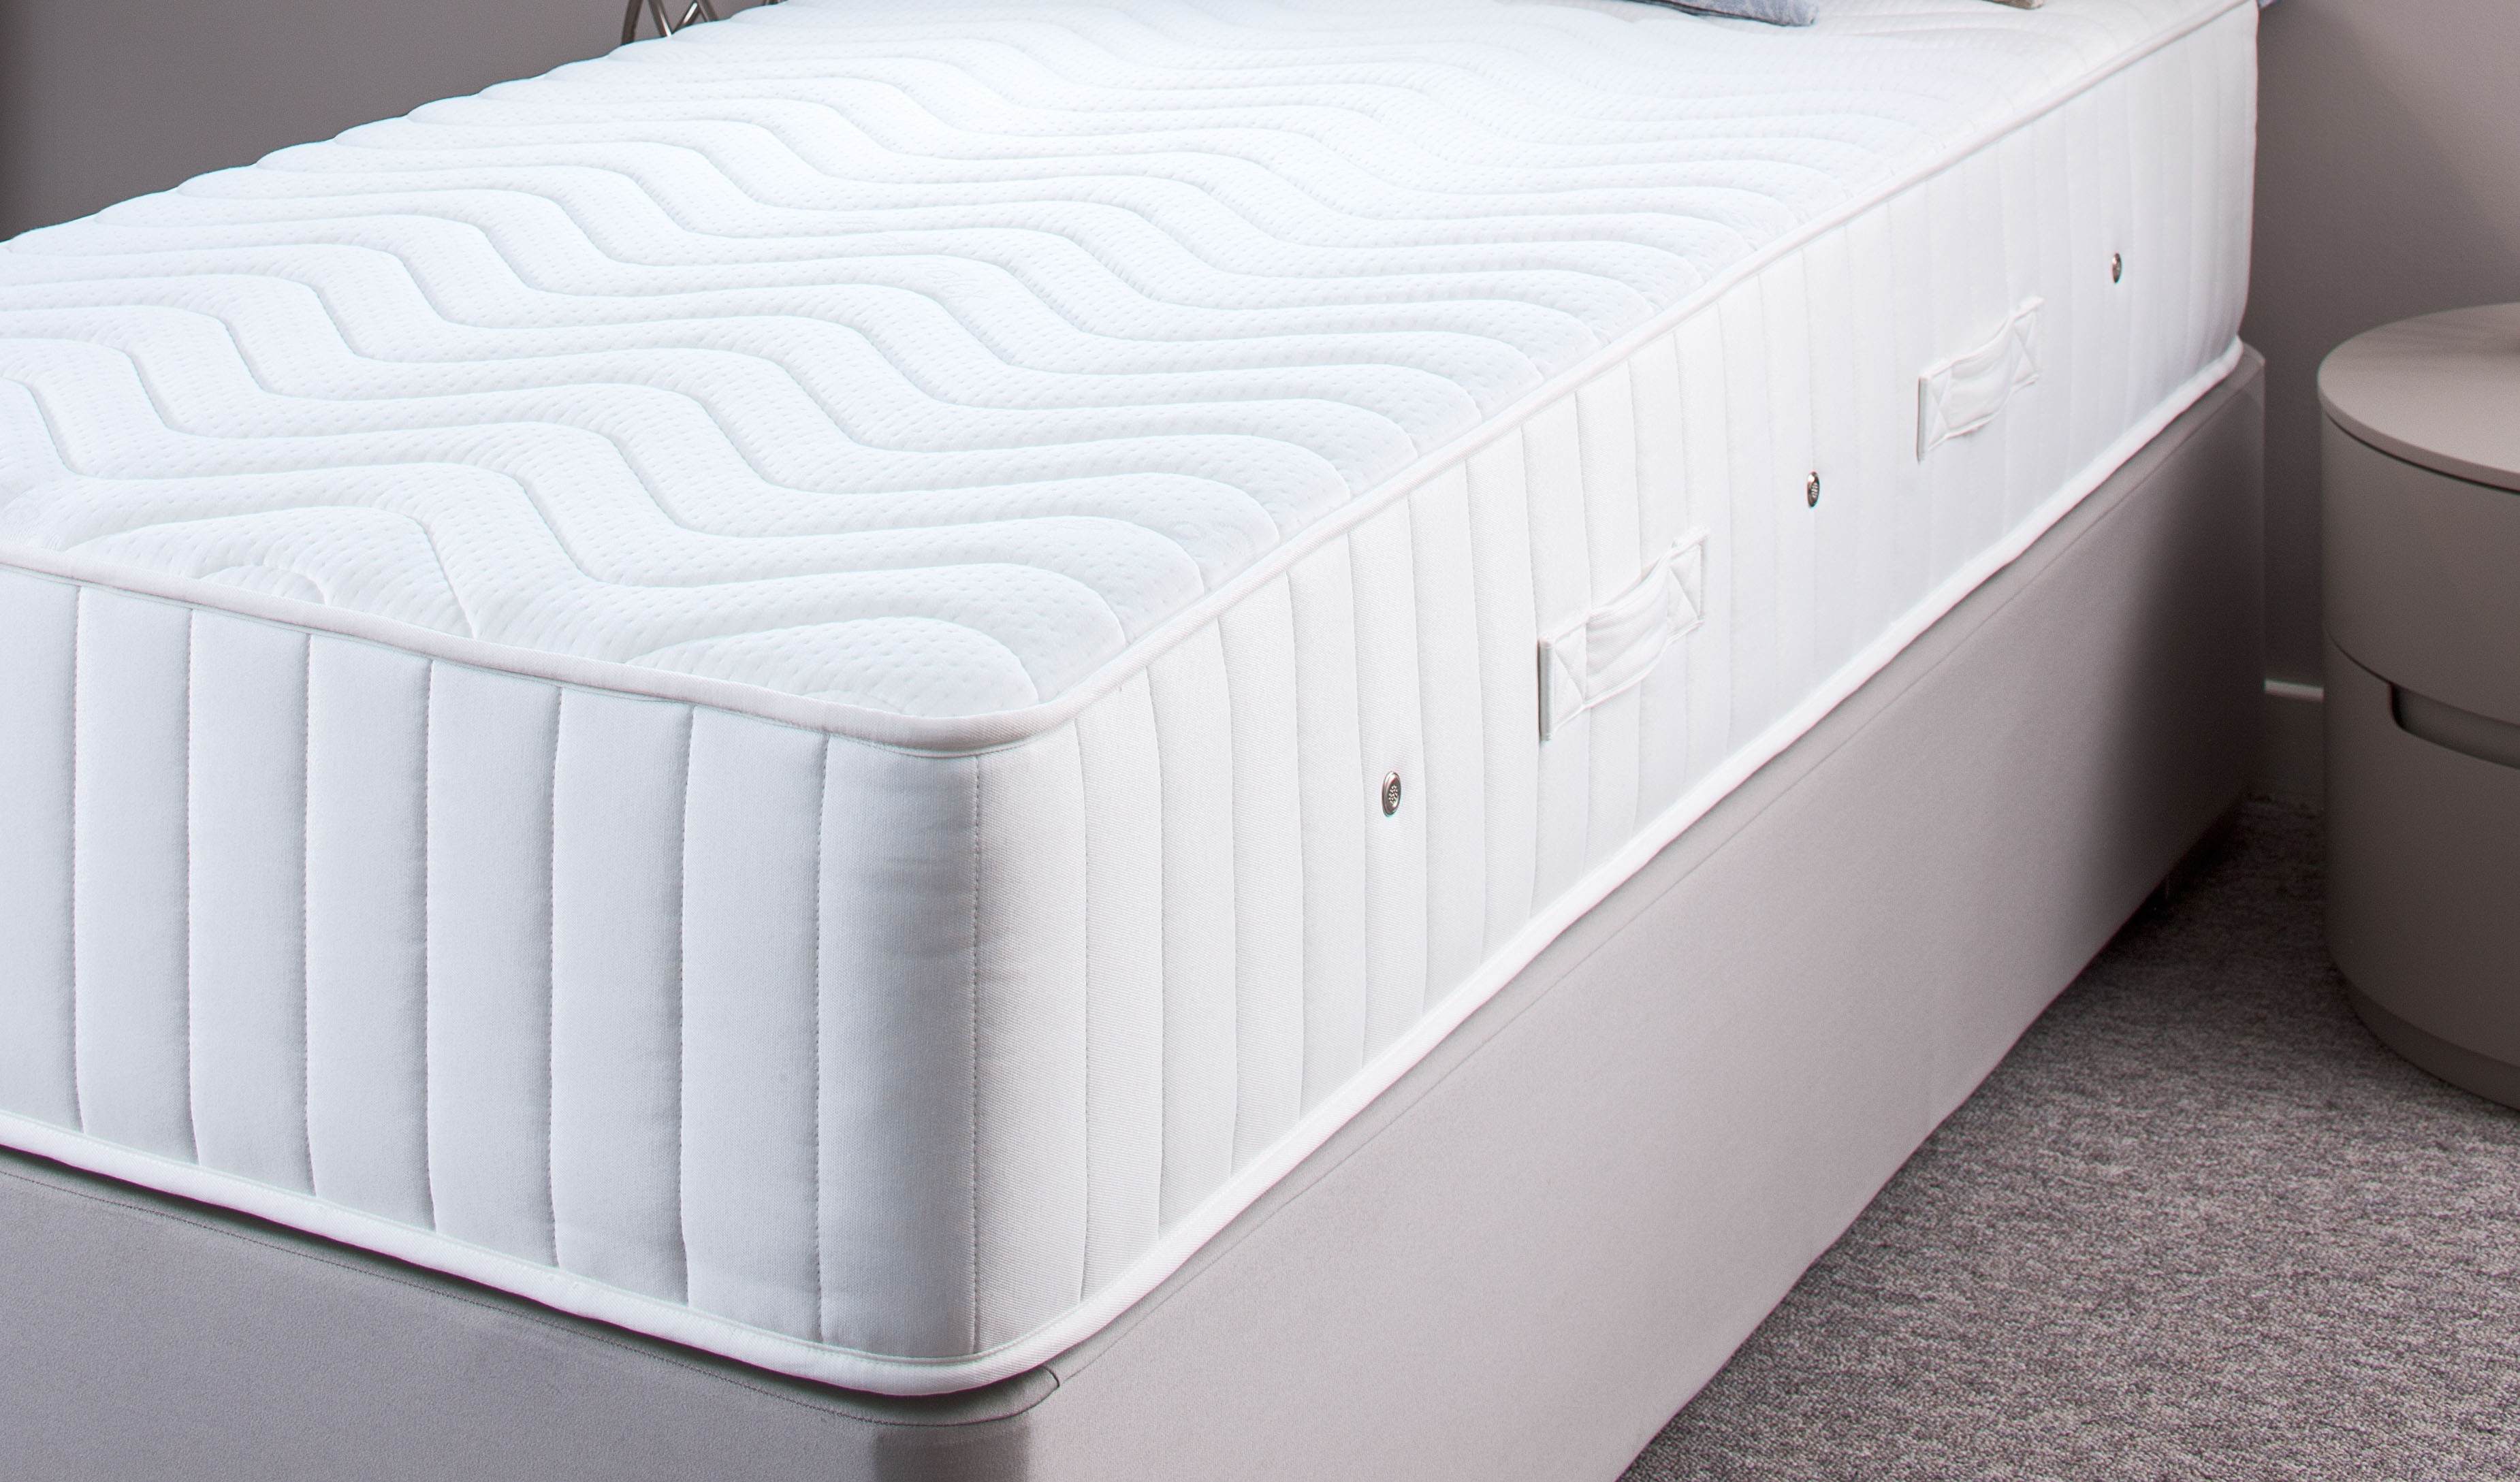 hard mattress pad for back pain